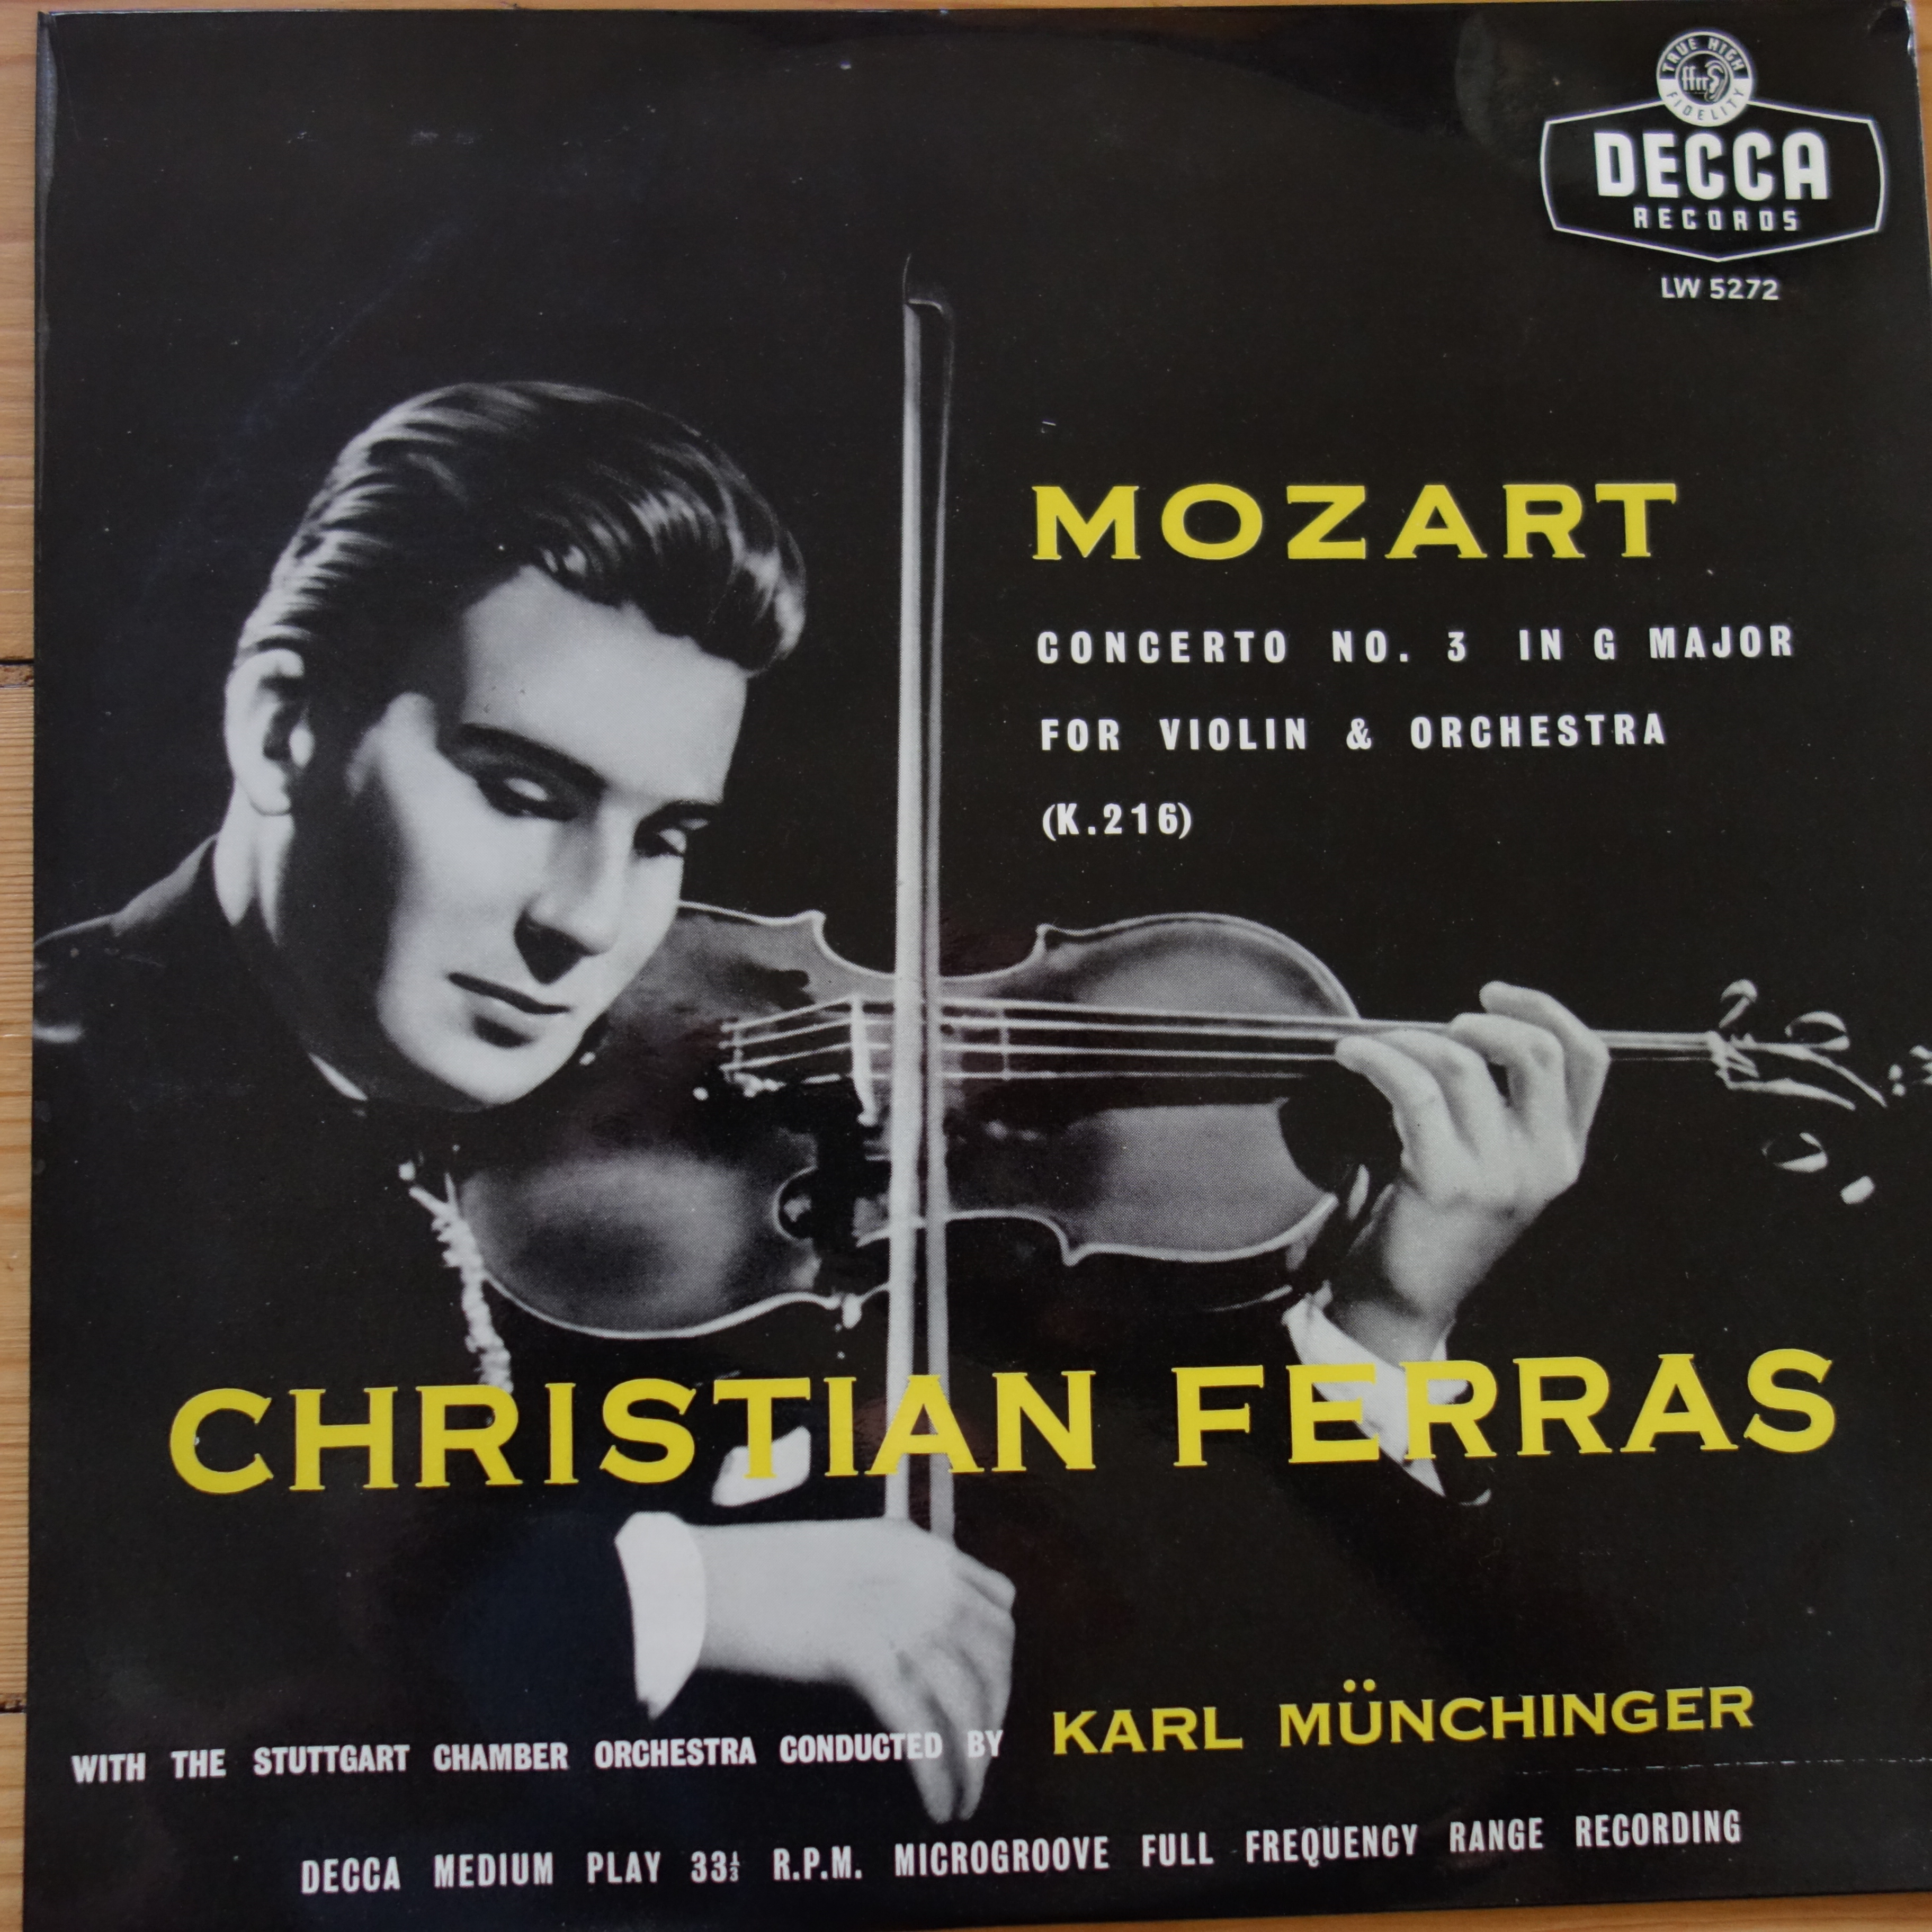 LW 5272 Mozart Violin Concerto No. 3 / Christian Ferras / Munchinger 10" LP